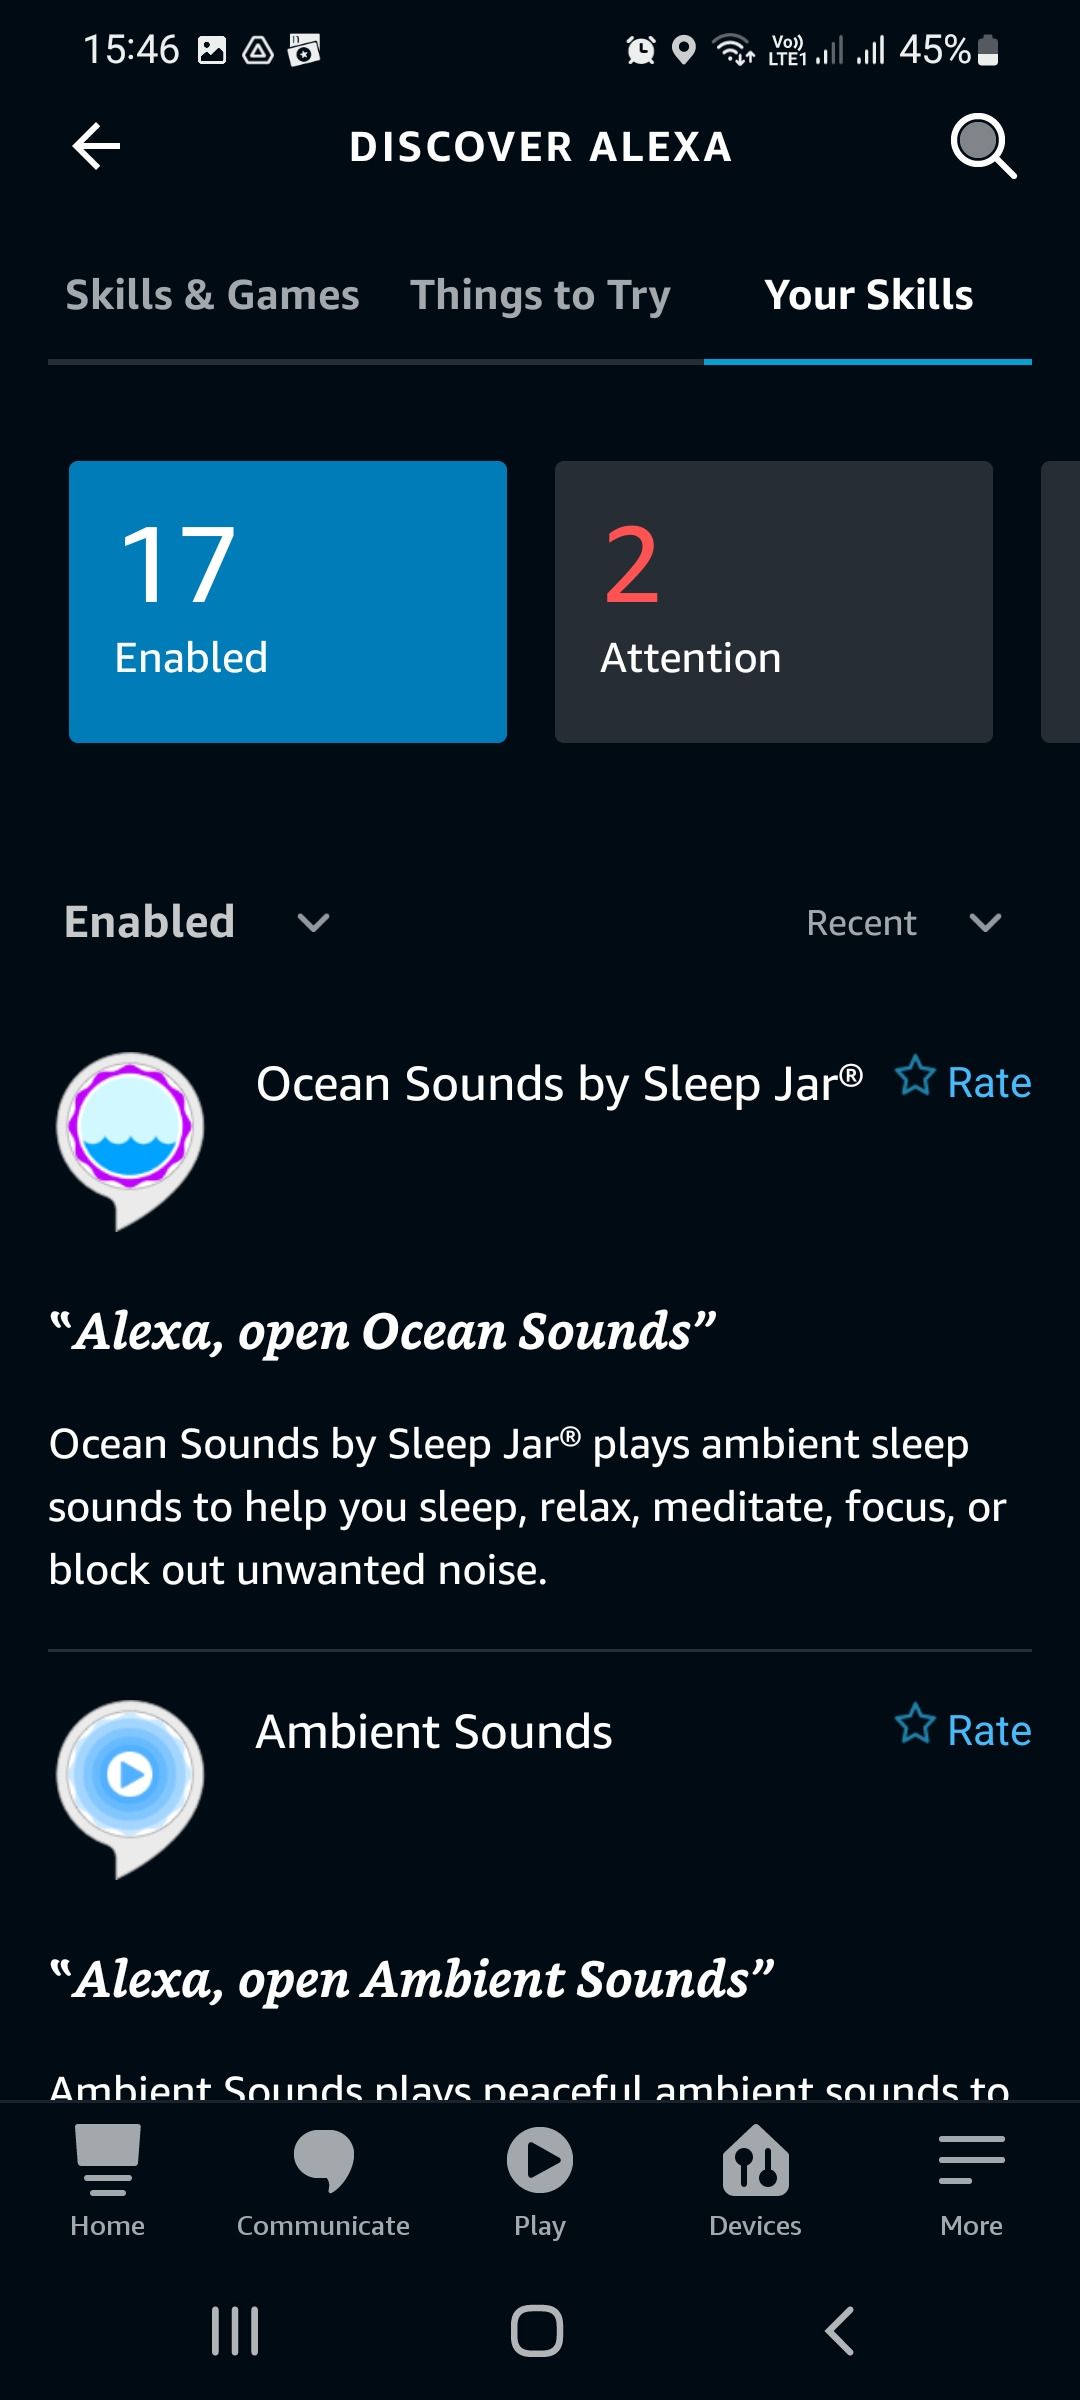 The skills list in the Alexa app